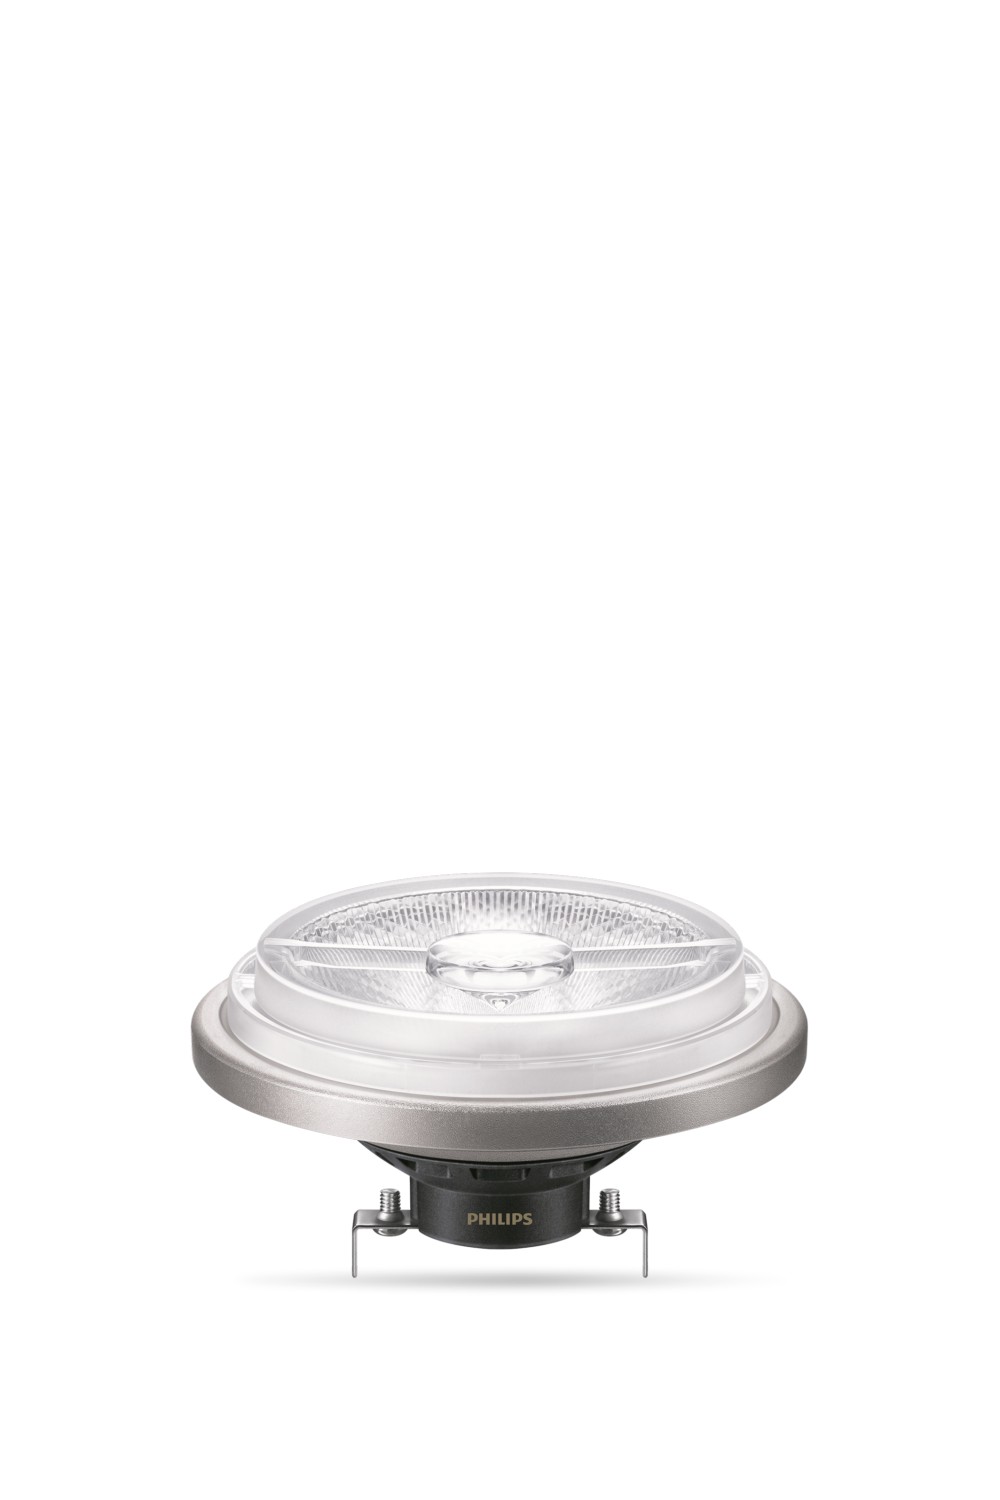 Philips LED Reflektorlampe AR111 ExpertColor 20 Watt 927 24 Grad